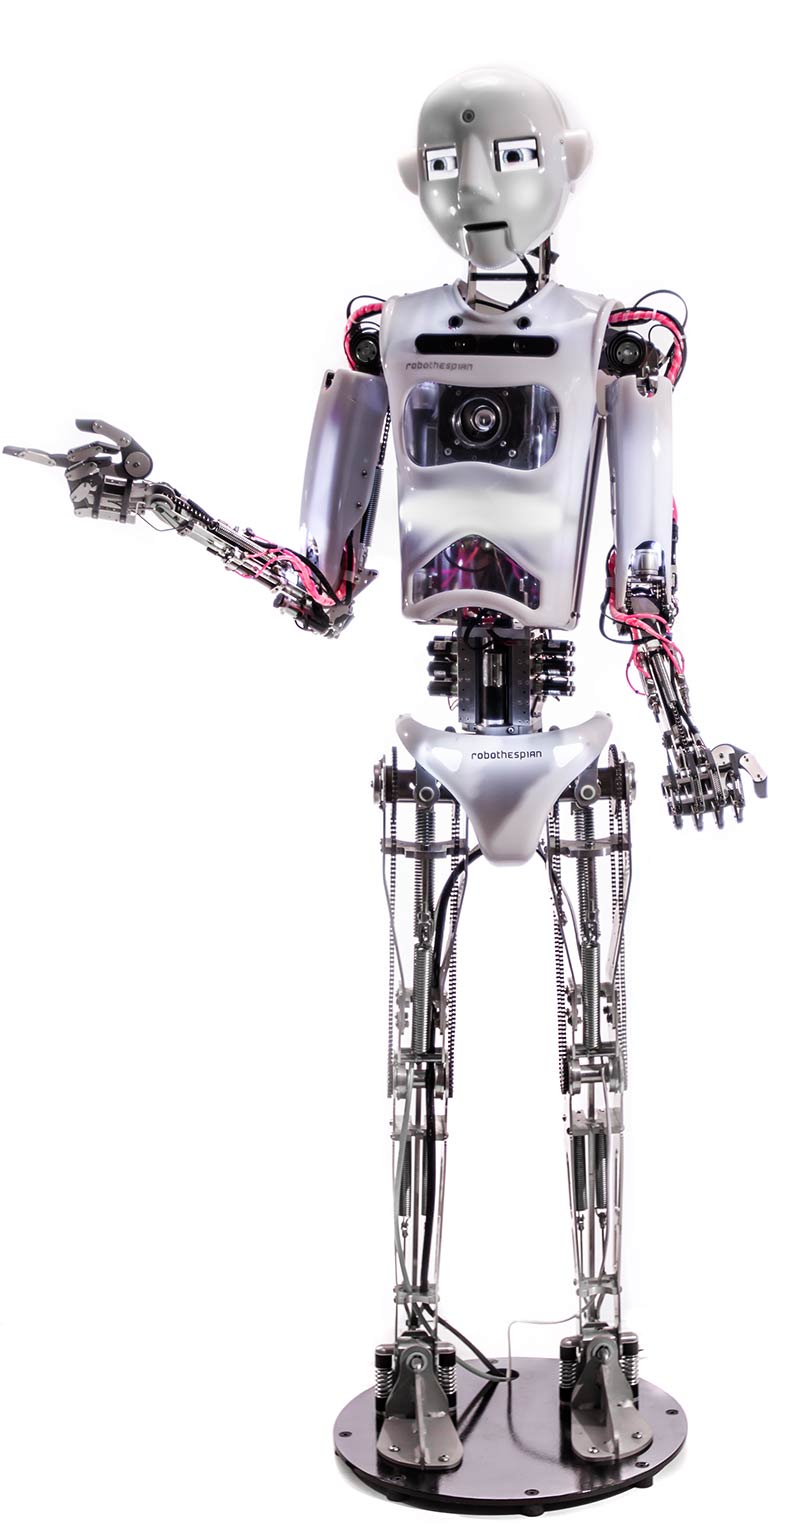 Robot Rental UK - RoboThespian, Robot for Hire